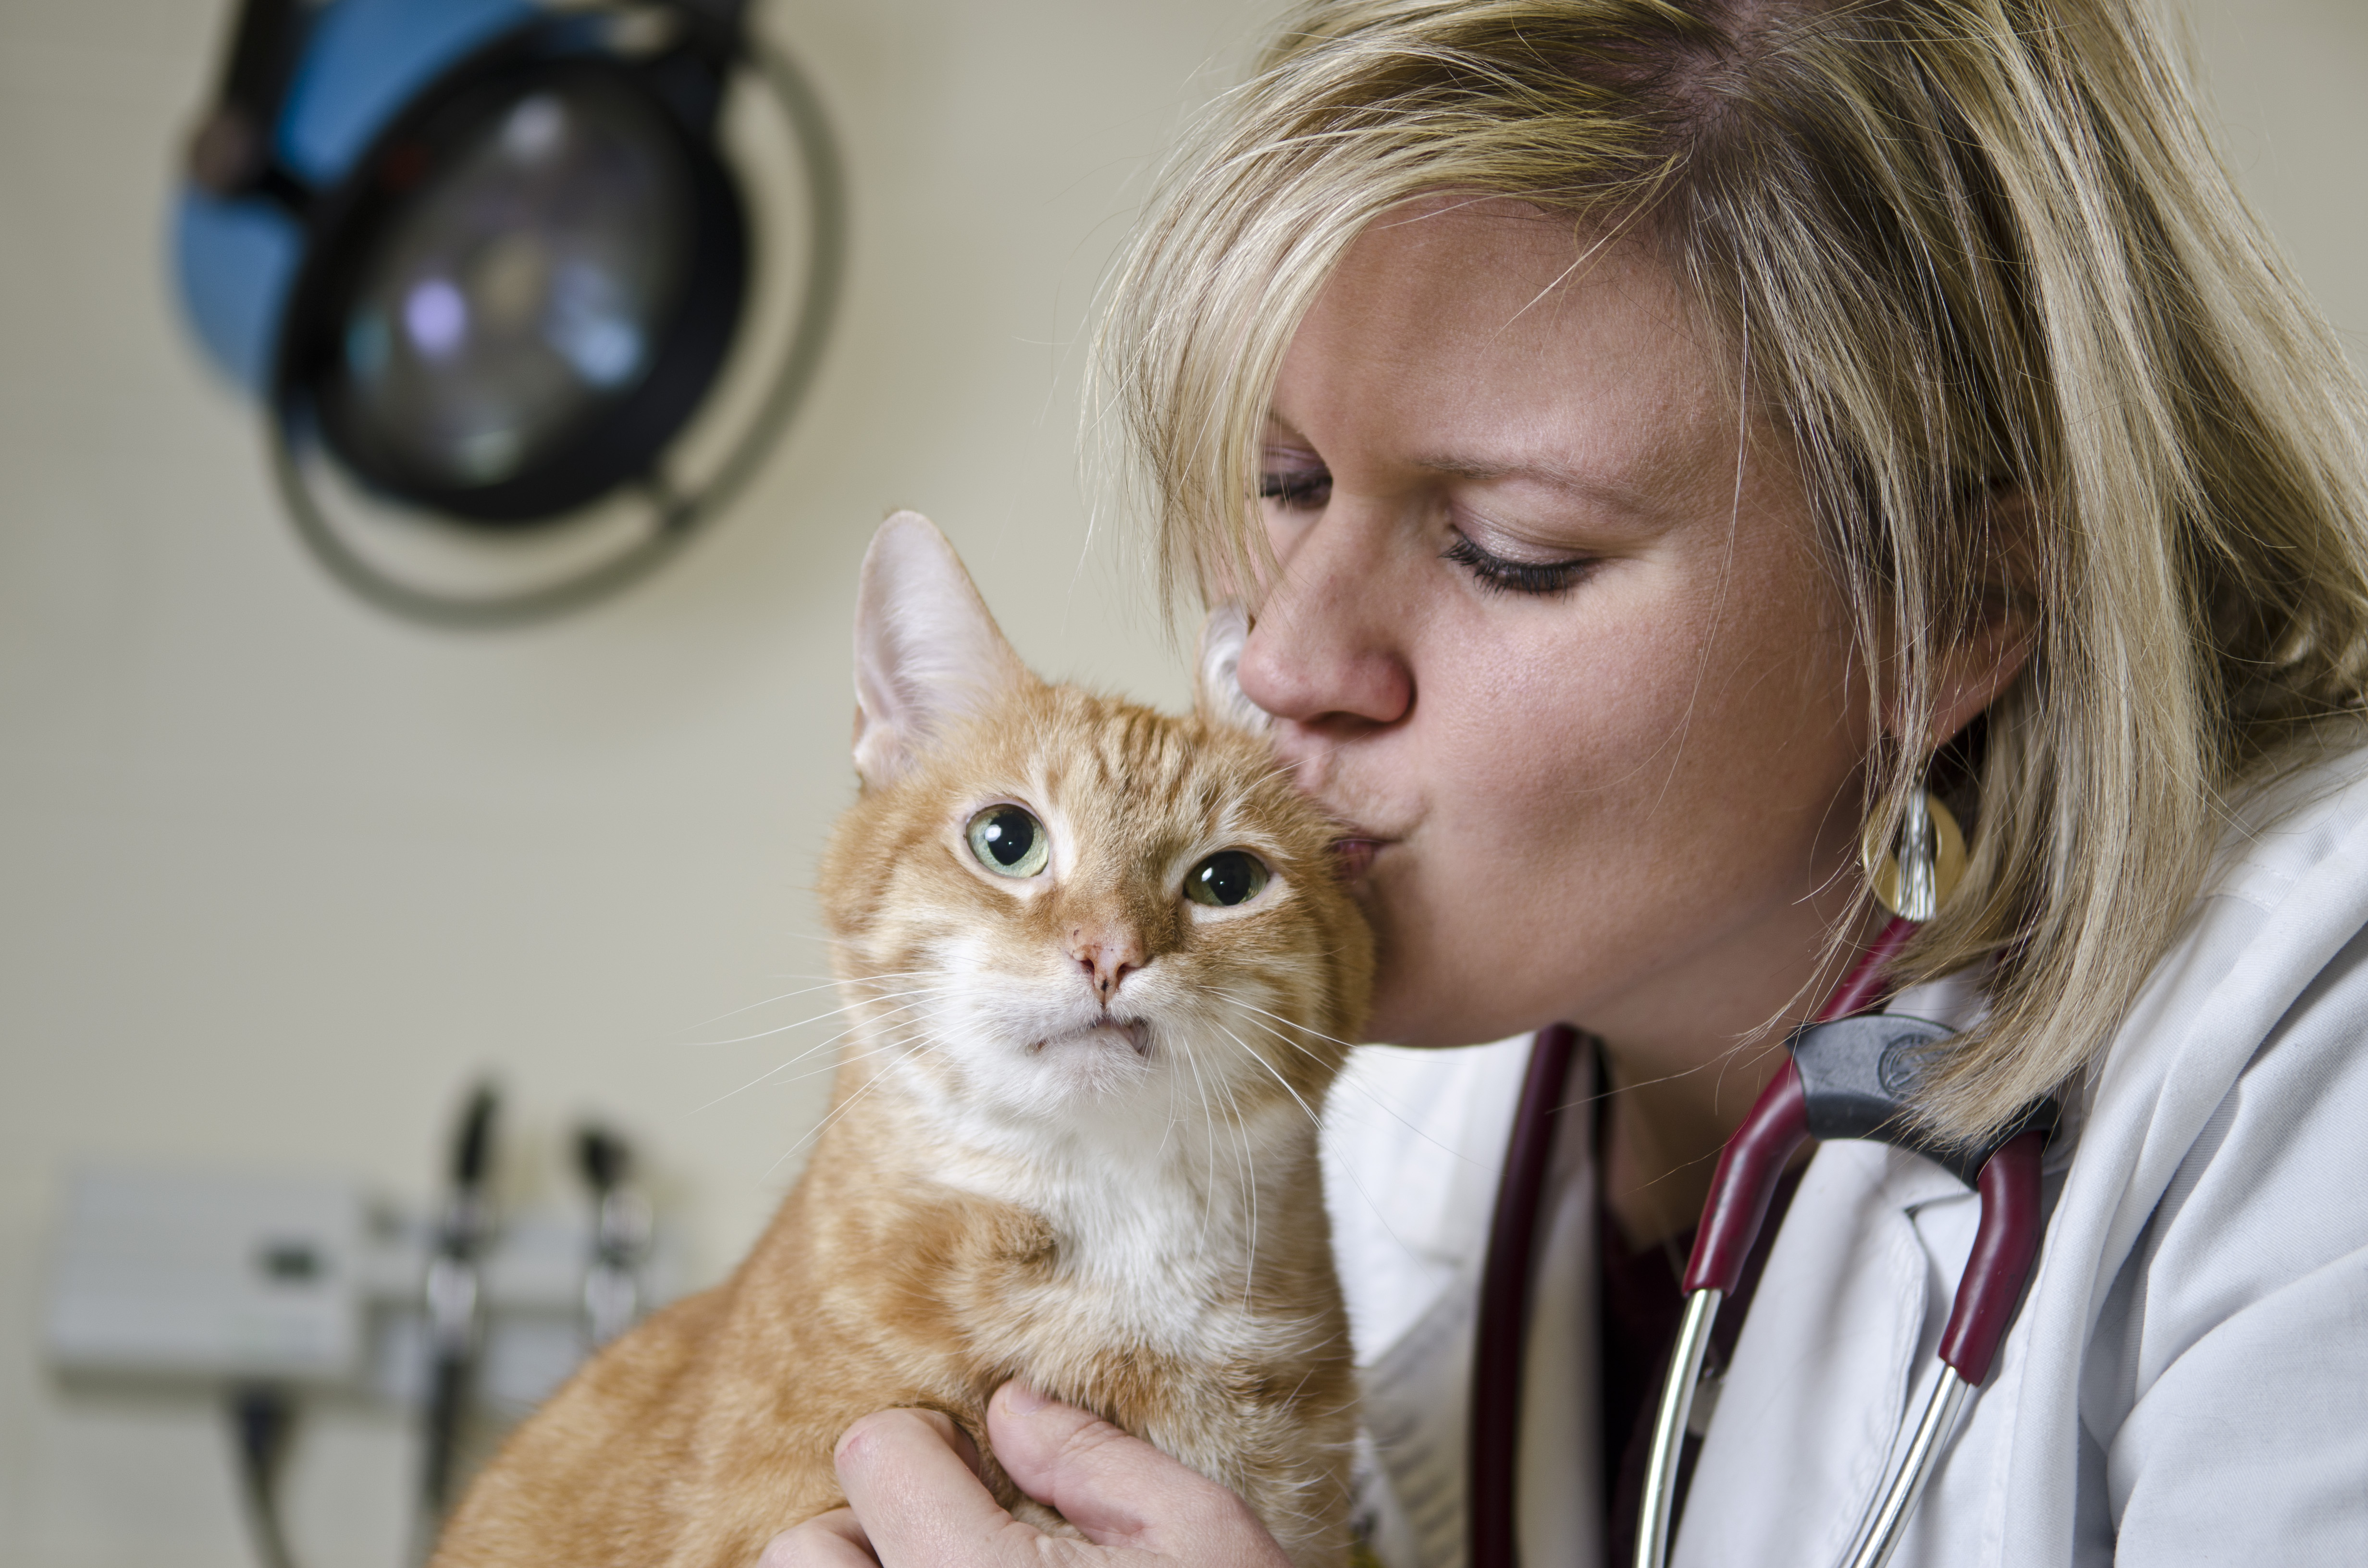 A veterinarian kisses a cat on the head